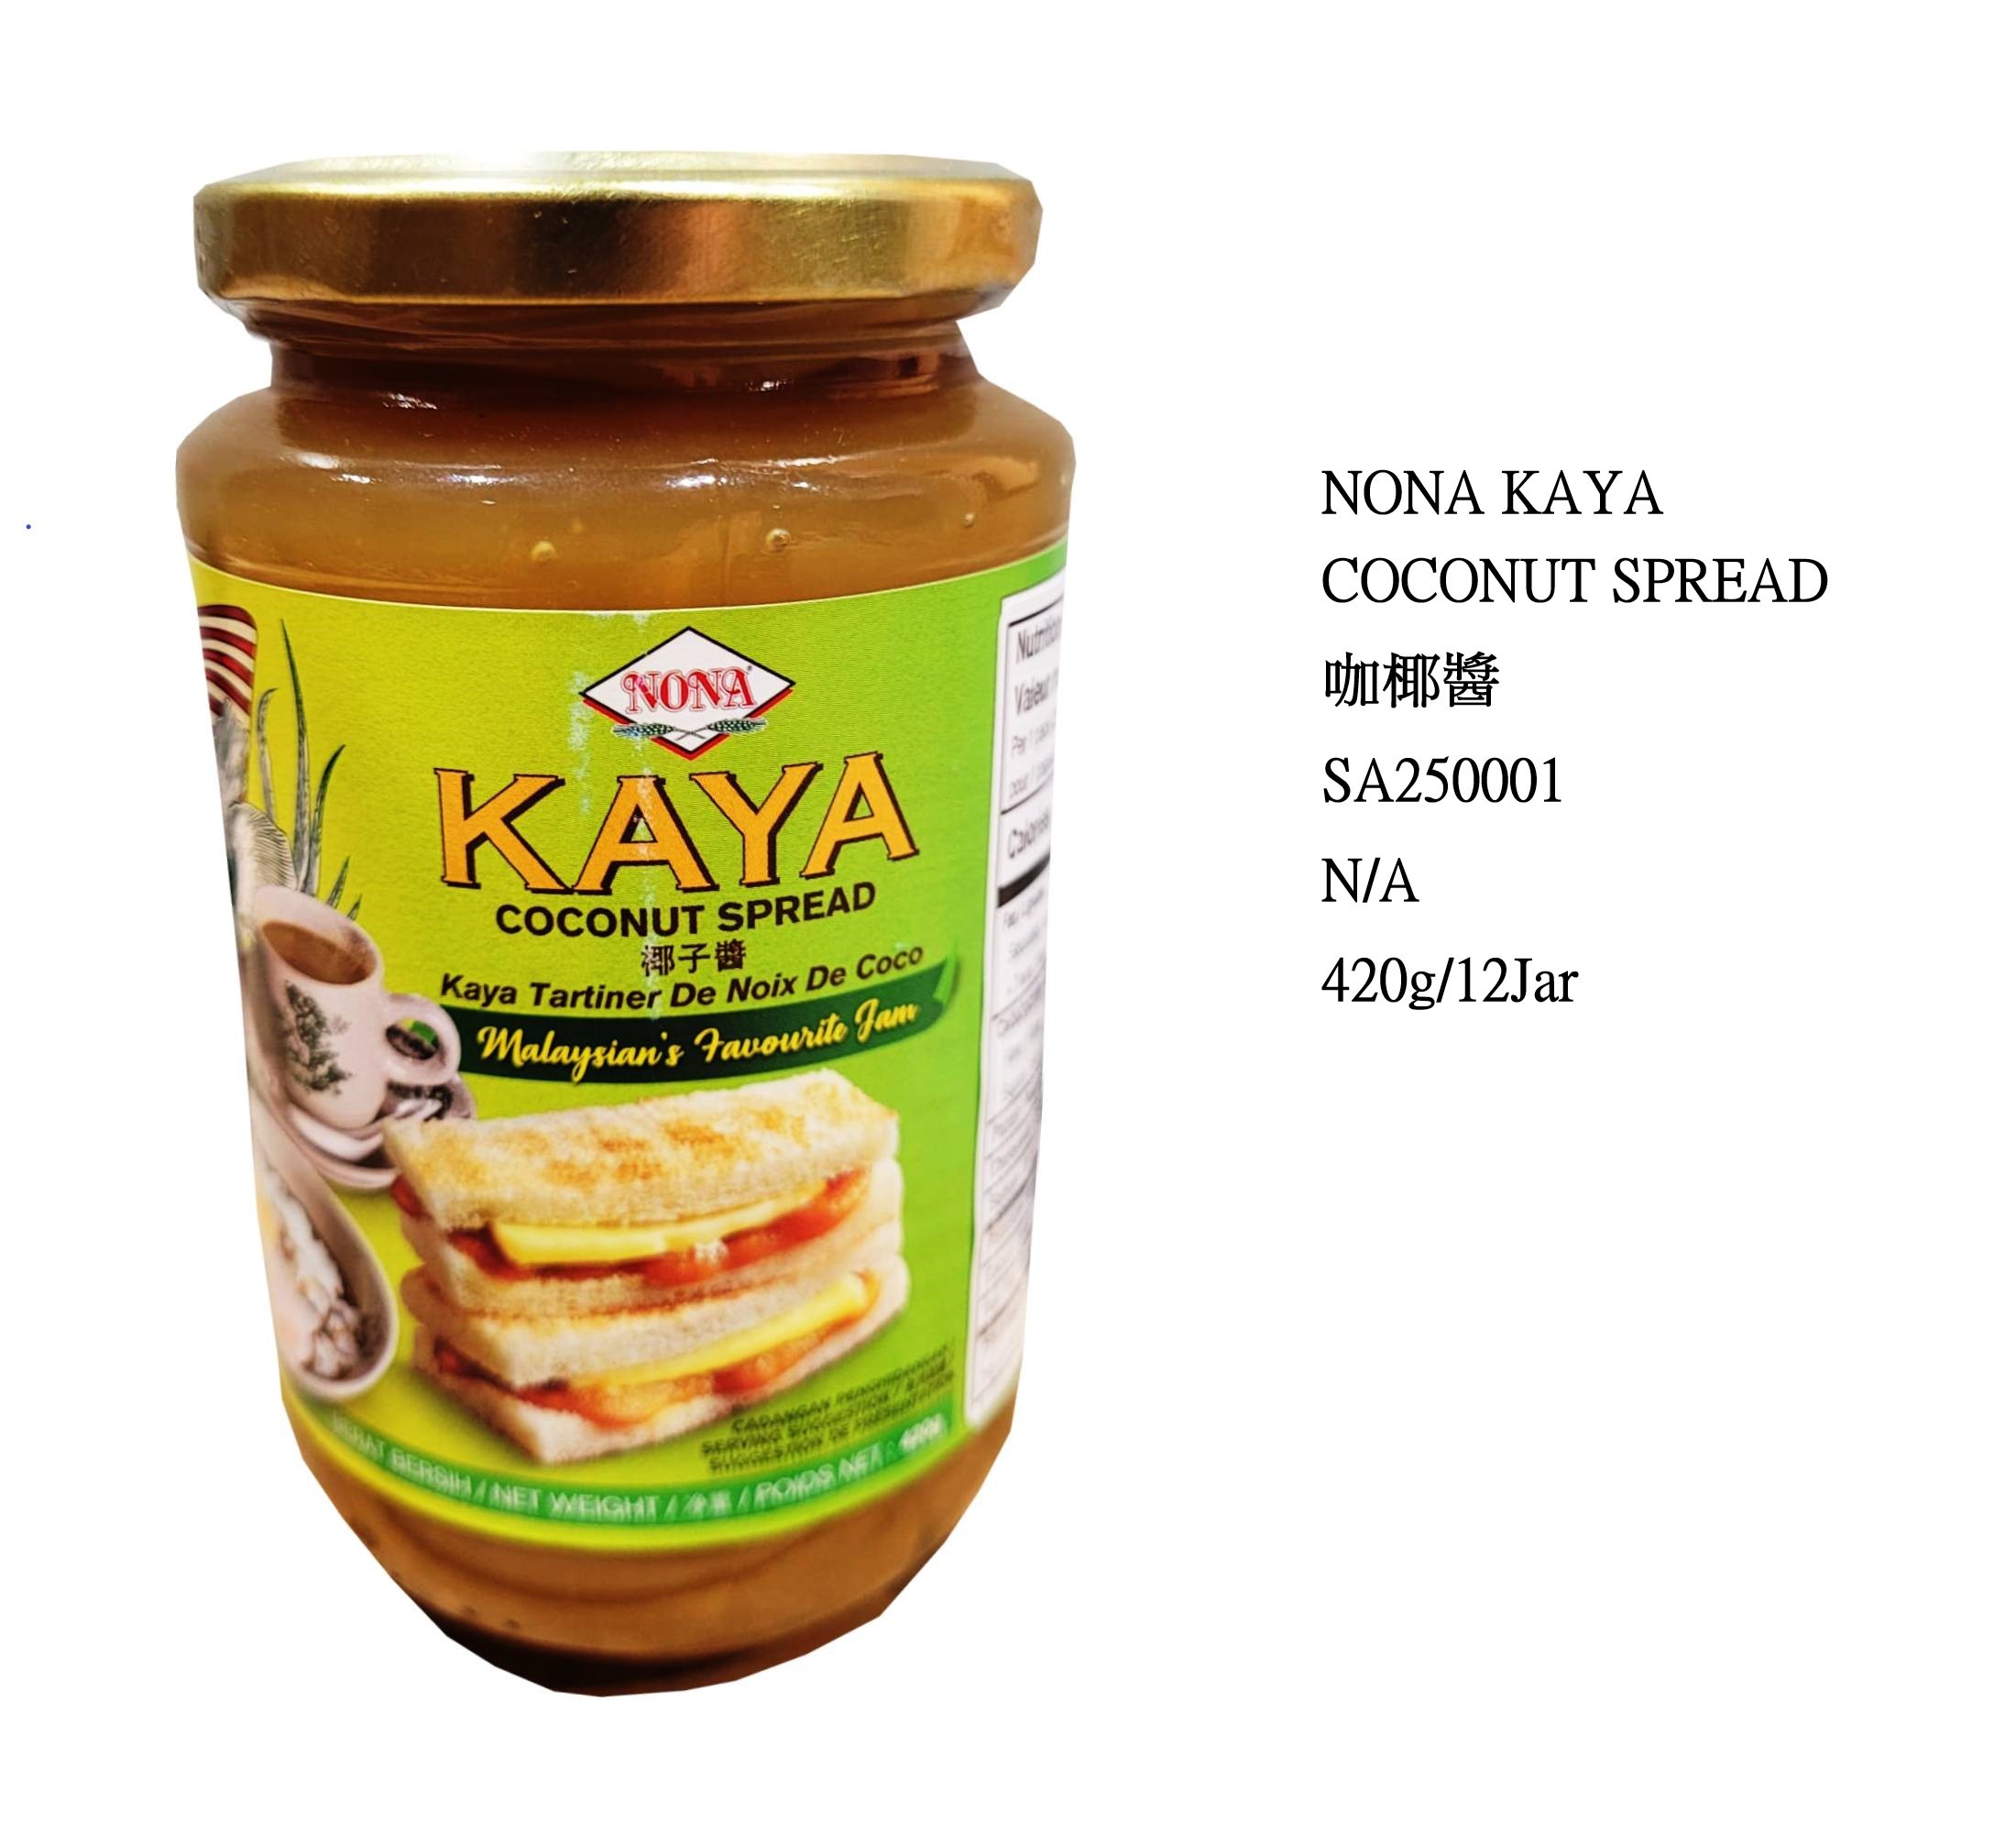 NONA KAYA COCONUT SPREAD SA205001